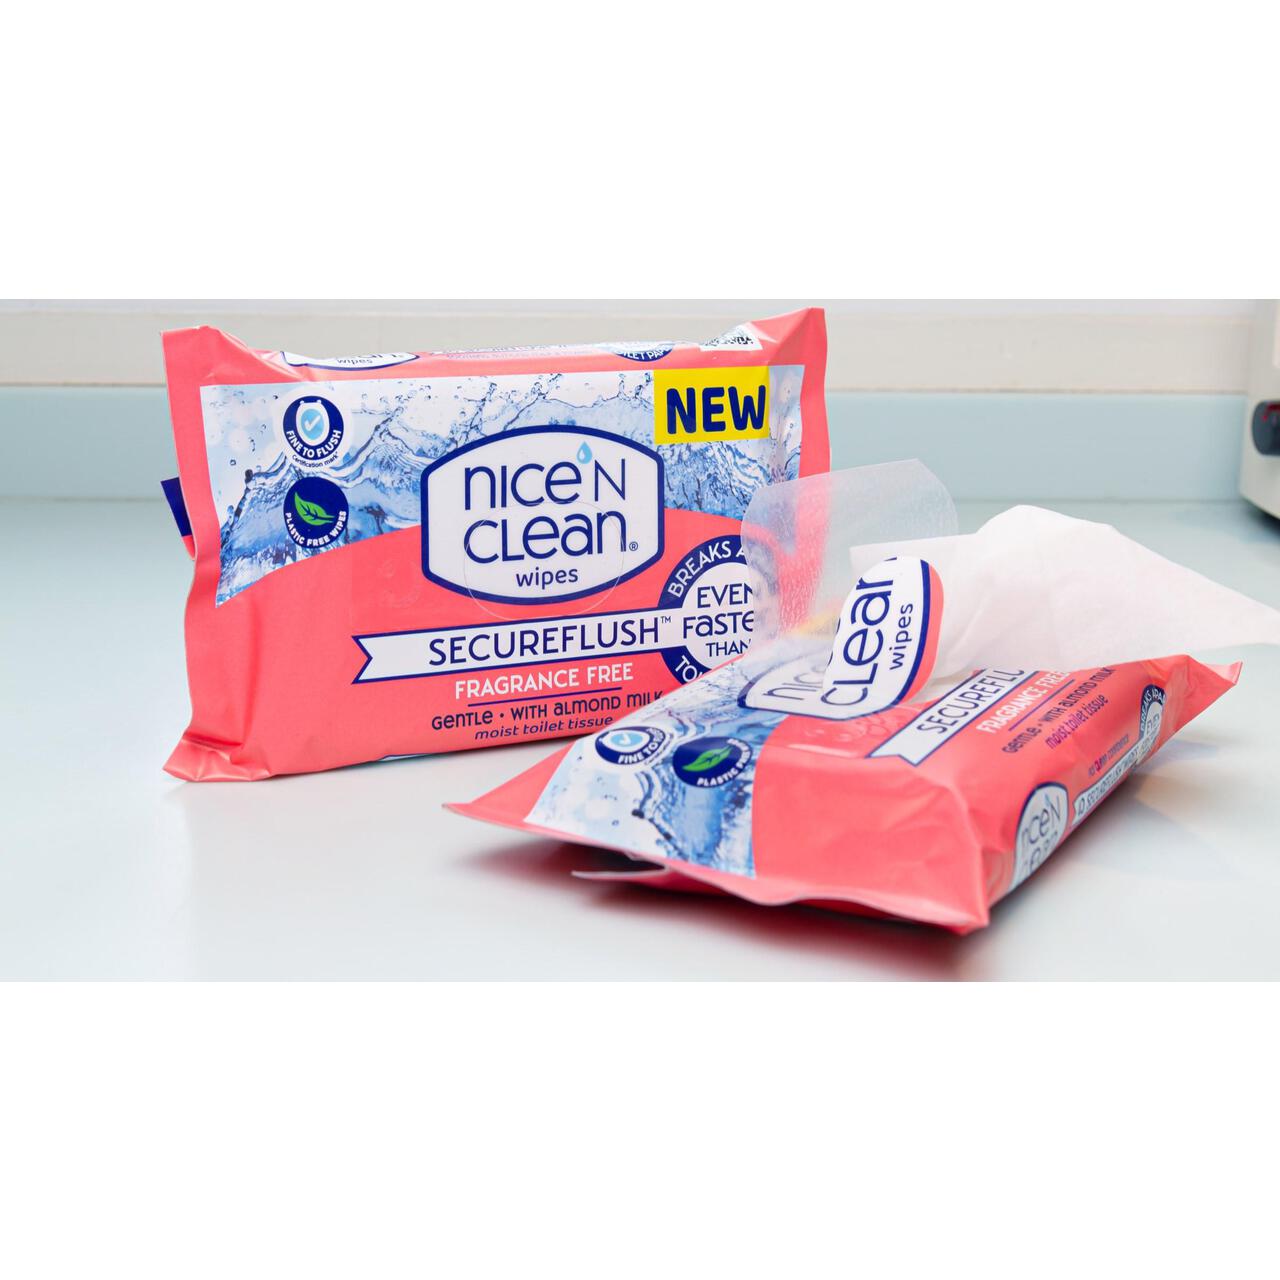 Nice 'N CLEAN SecureFlush Fragranced Moist Toilet Tissue with Almond Milk 40 per pack